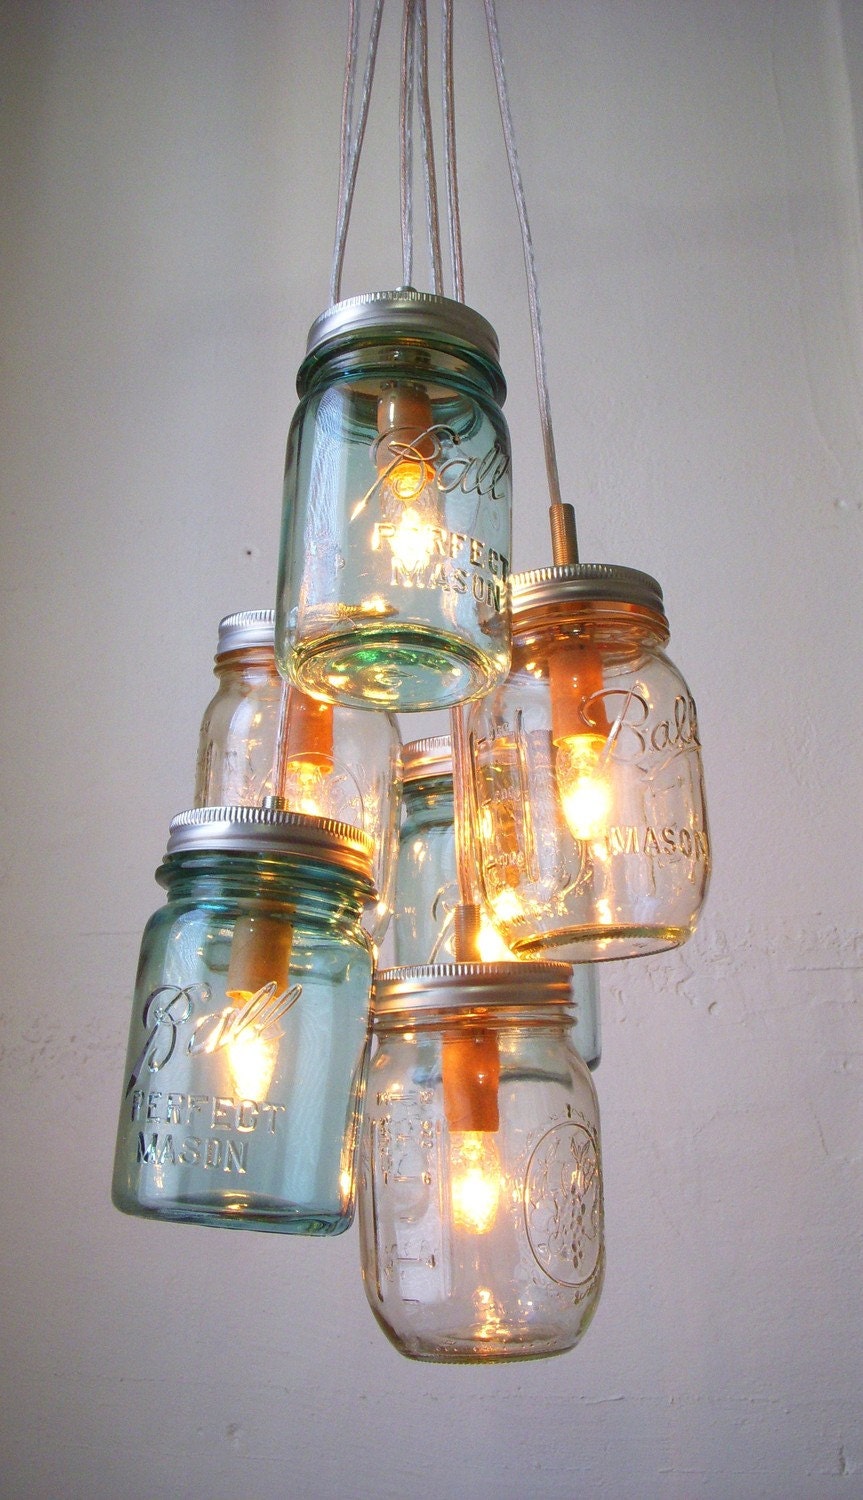  Chandelier Mason Jar Lamps Lights UpCycled Rustic Eco Friendly Wedding